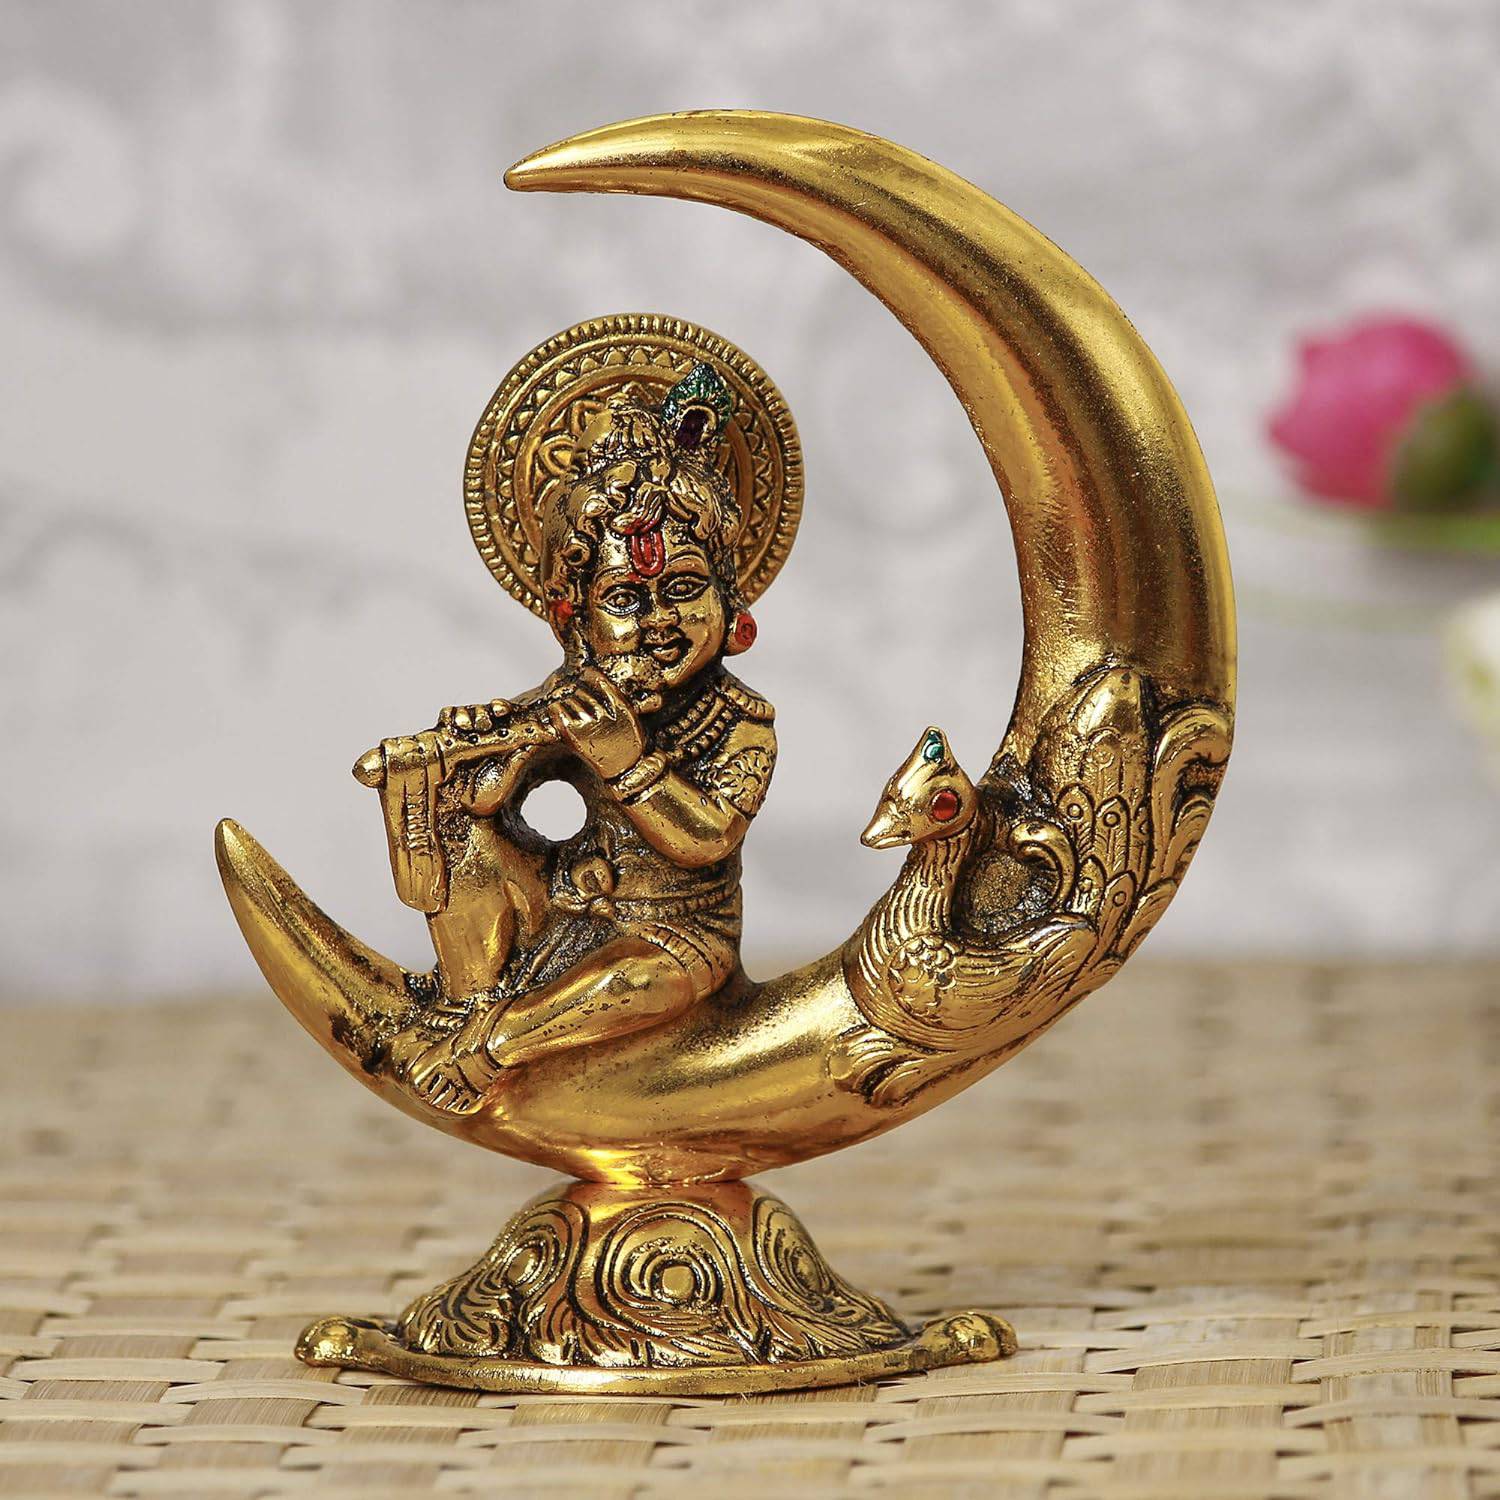 Golden Metal Handcrafted Lord Krishna Idol Playing Flute and Sitting On Half Moon Decorative Showpiece for Home Decor - Ideal Gift for Krishna Janmashtami, Housewarming, Wedding - YuvaFlowers